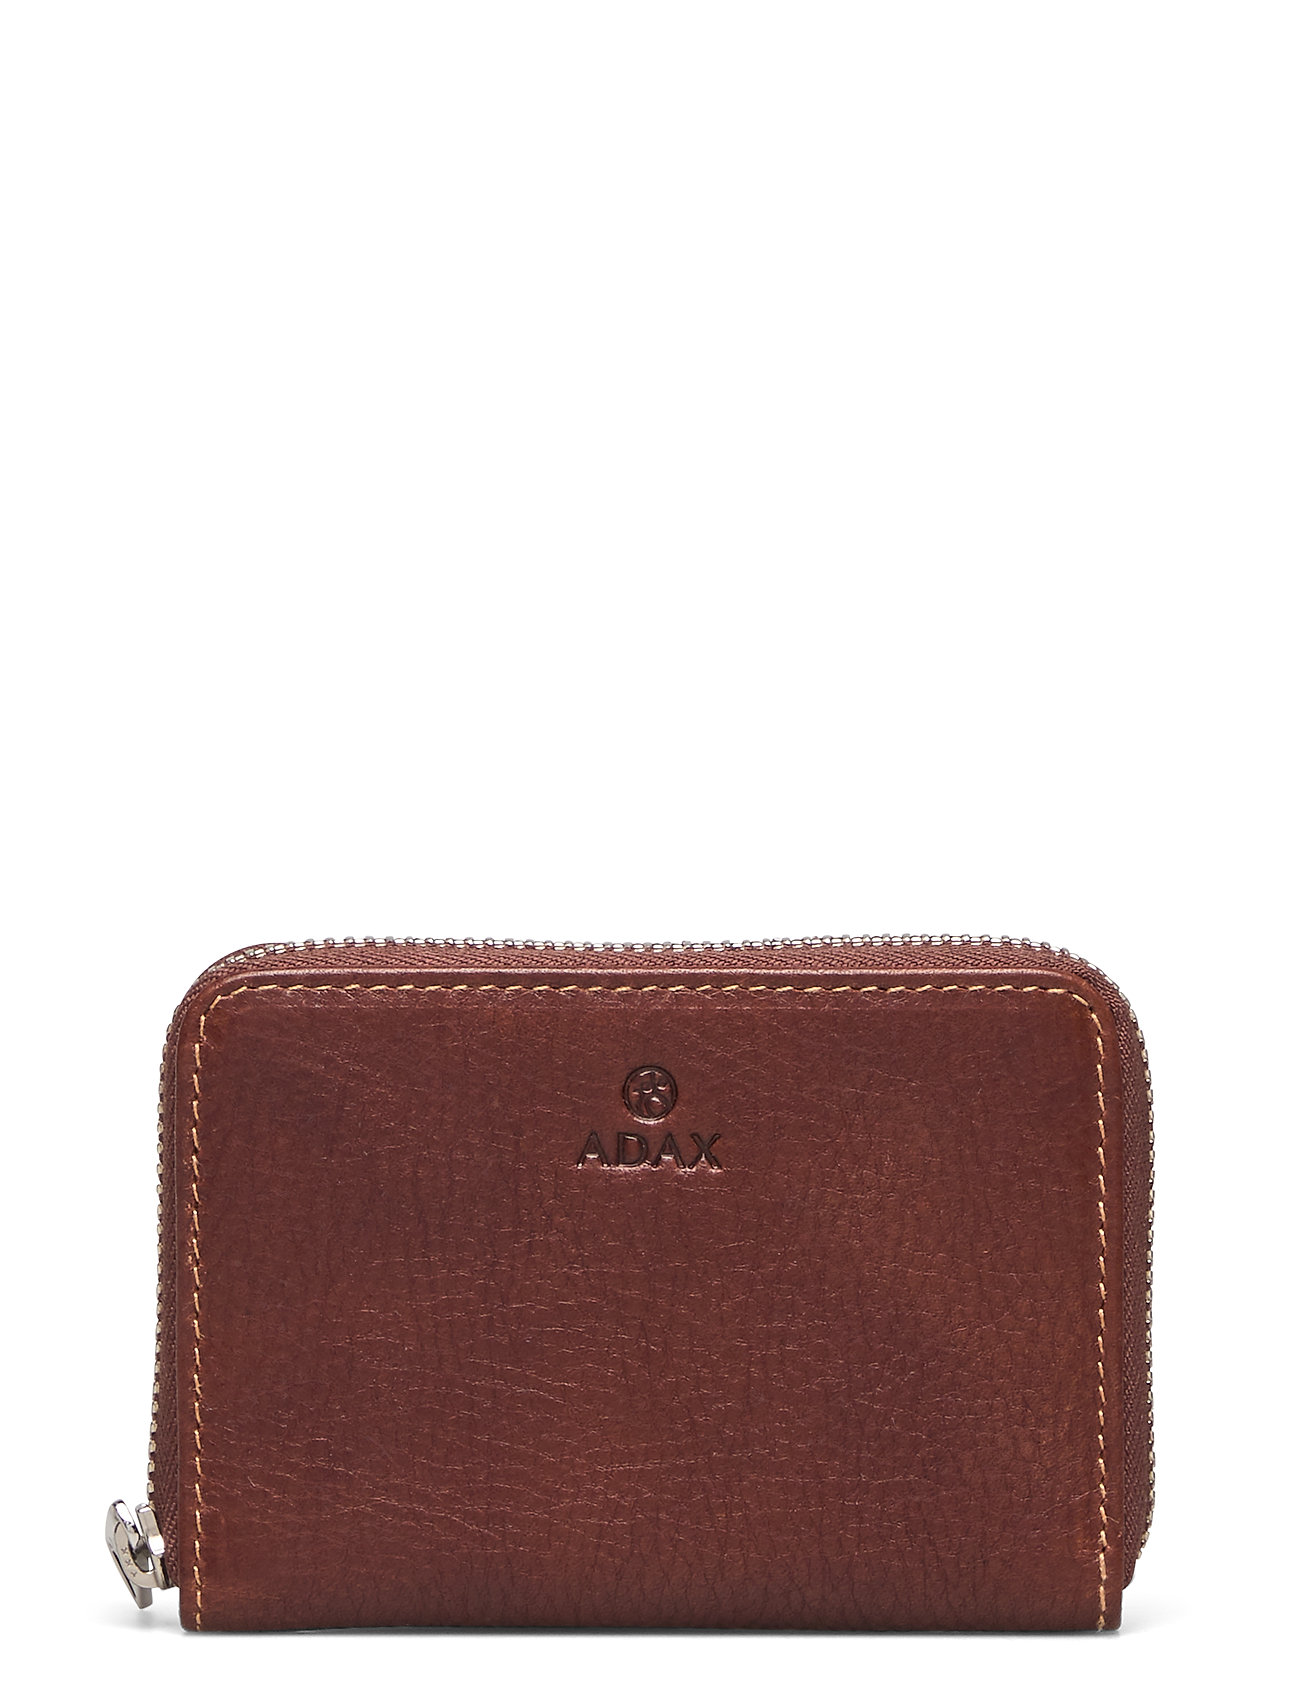 Cormorano Wallet Cornelia Bags Card Holders & Wallets Wallets Brown Adax